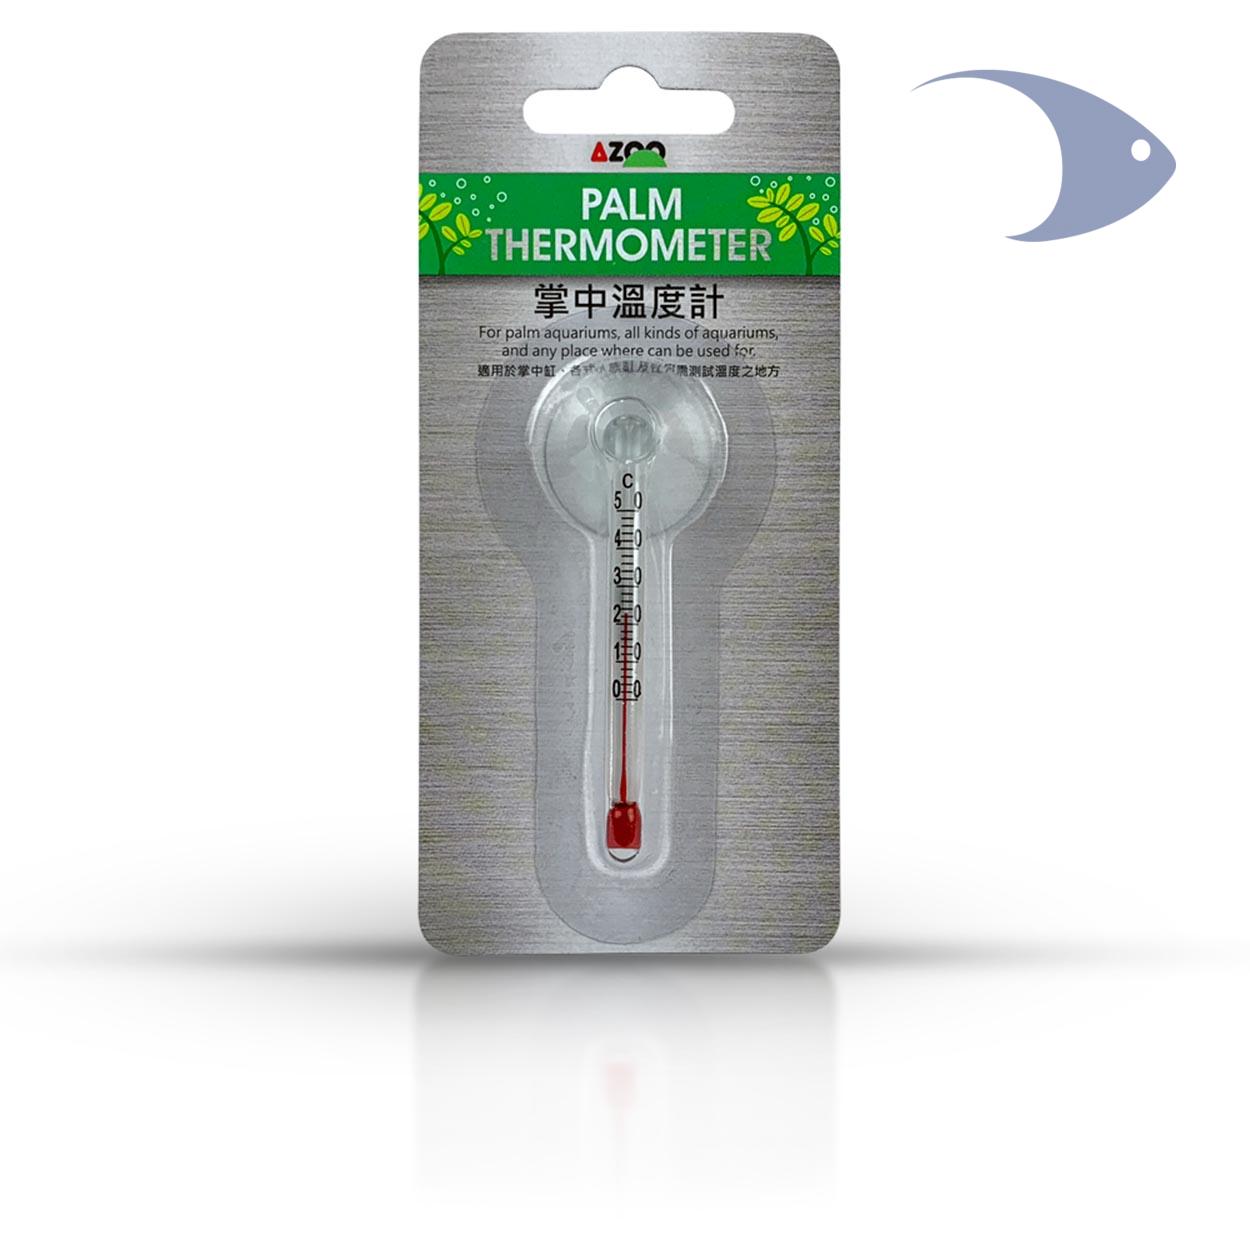 AZOO Palm Thermometer, mini termómetro nº1 para acuarios